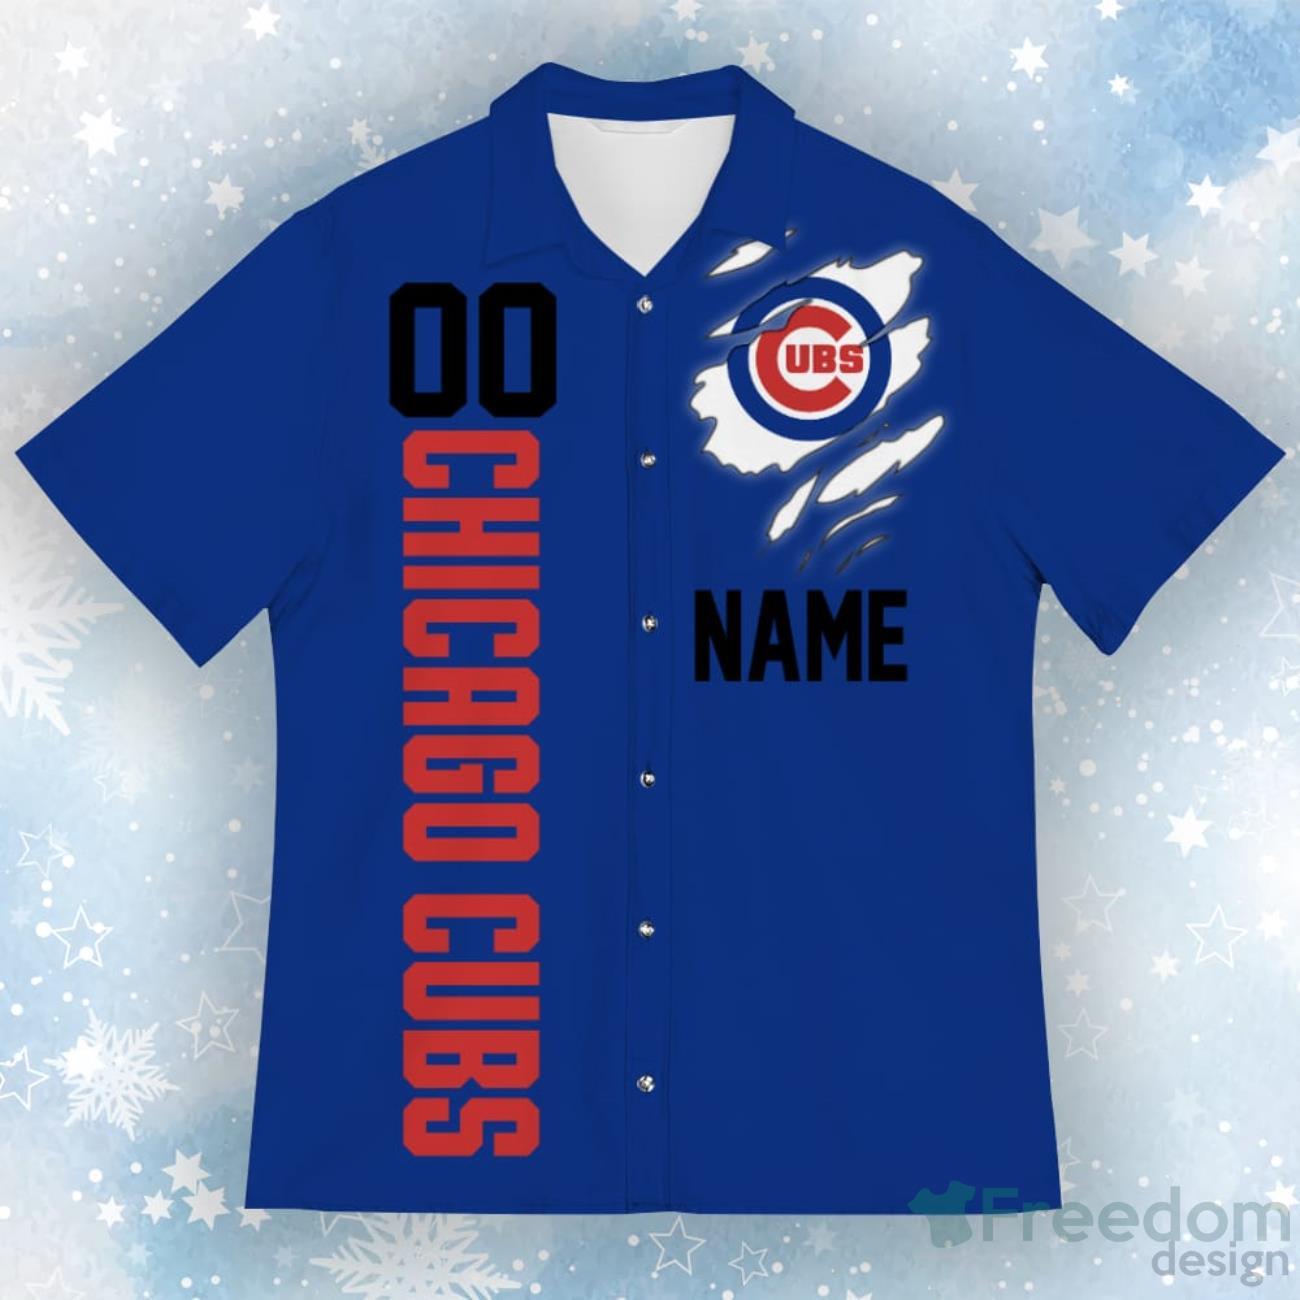 Chicago Cubs MLB Custom Name Hawaiian Shirt For Men Women Special